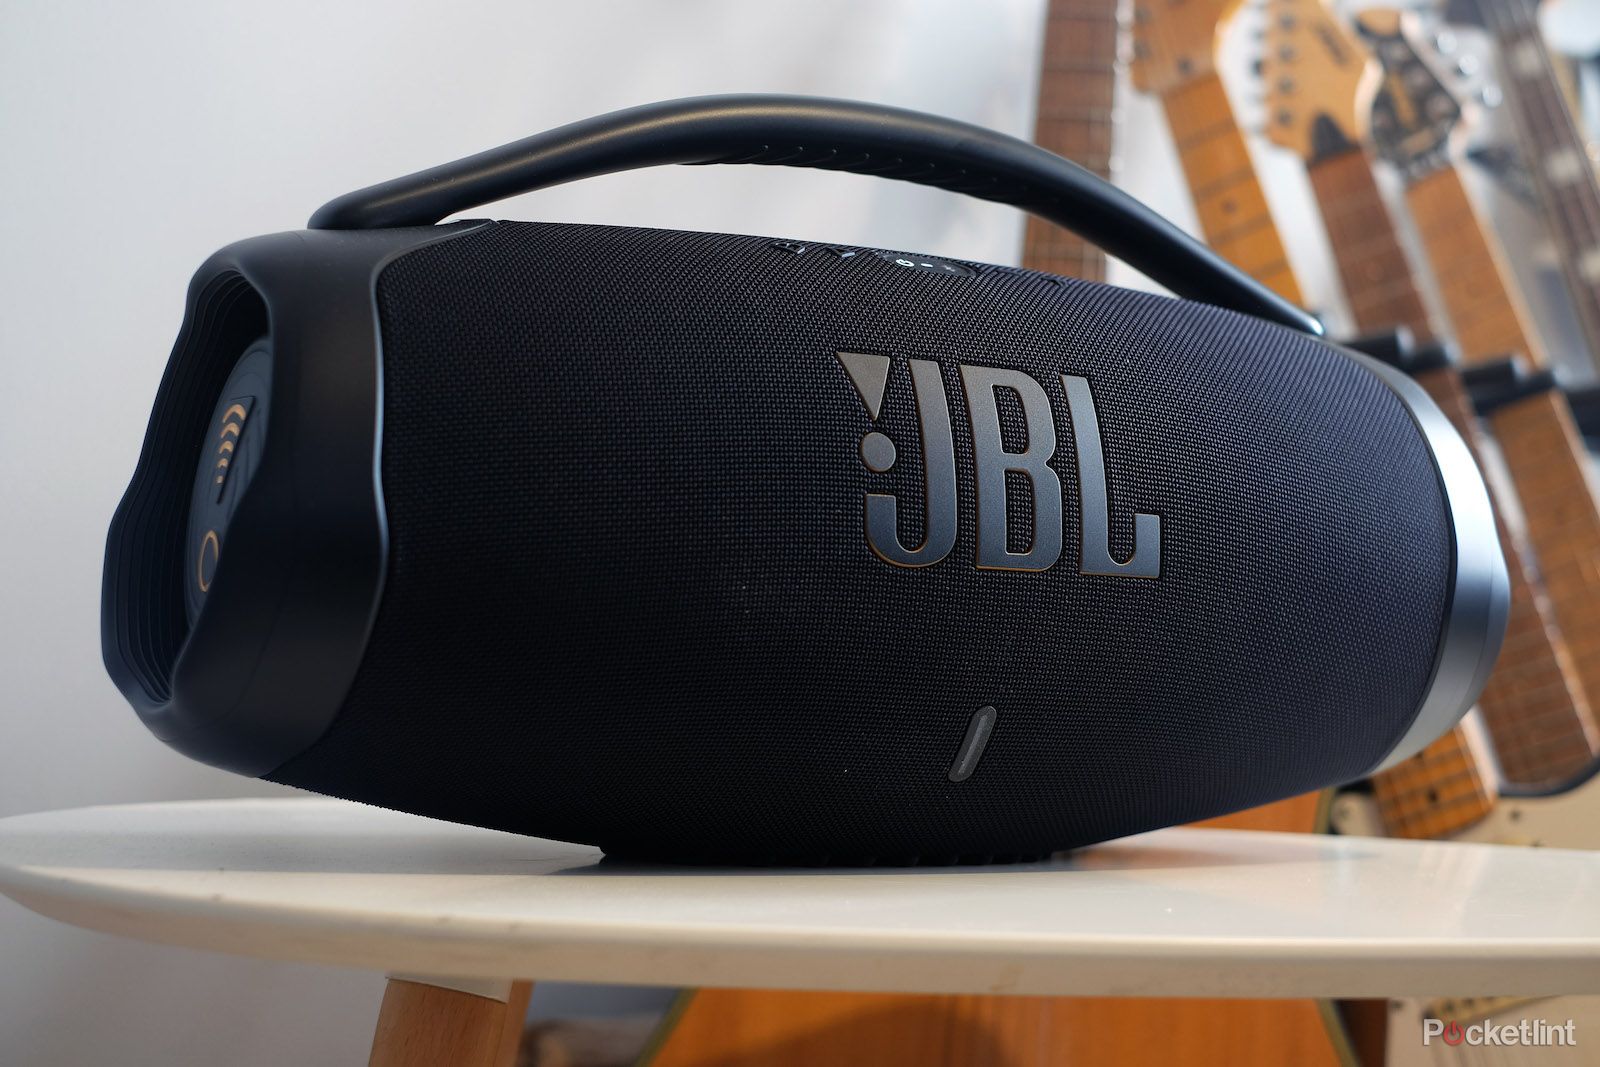 JBL Boombox 3 Boombox speaker for portable use wireless Blueto